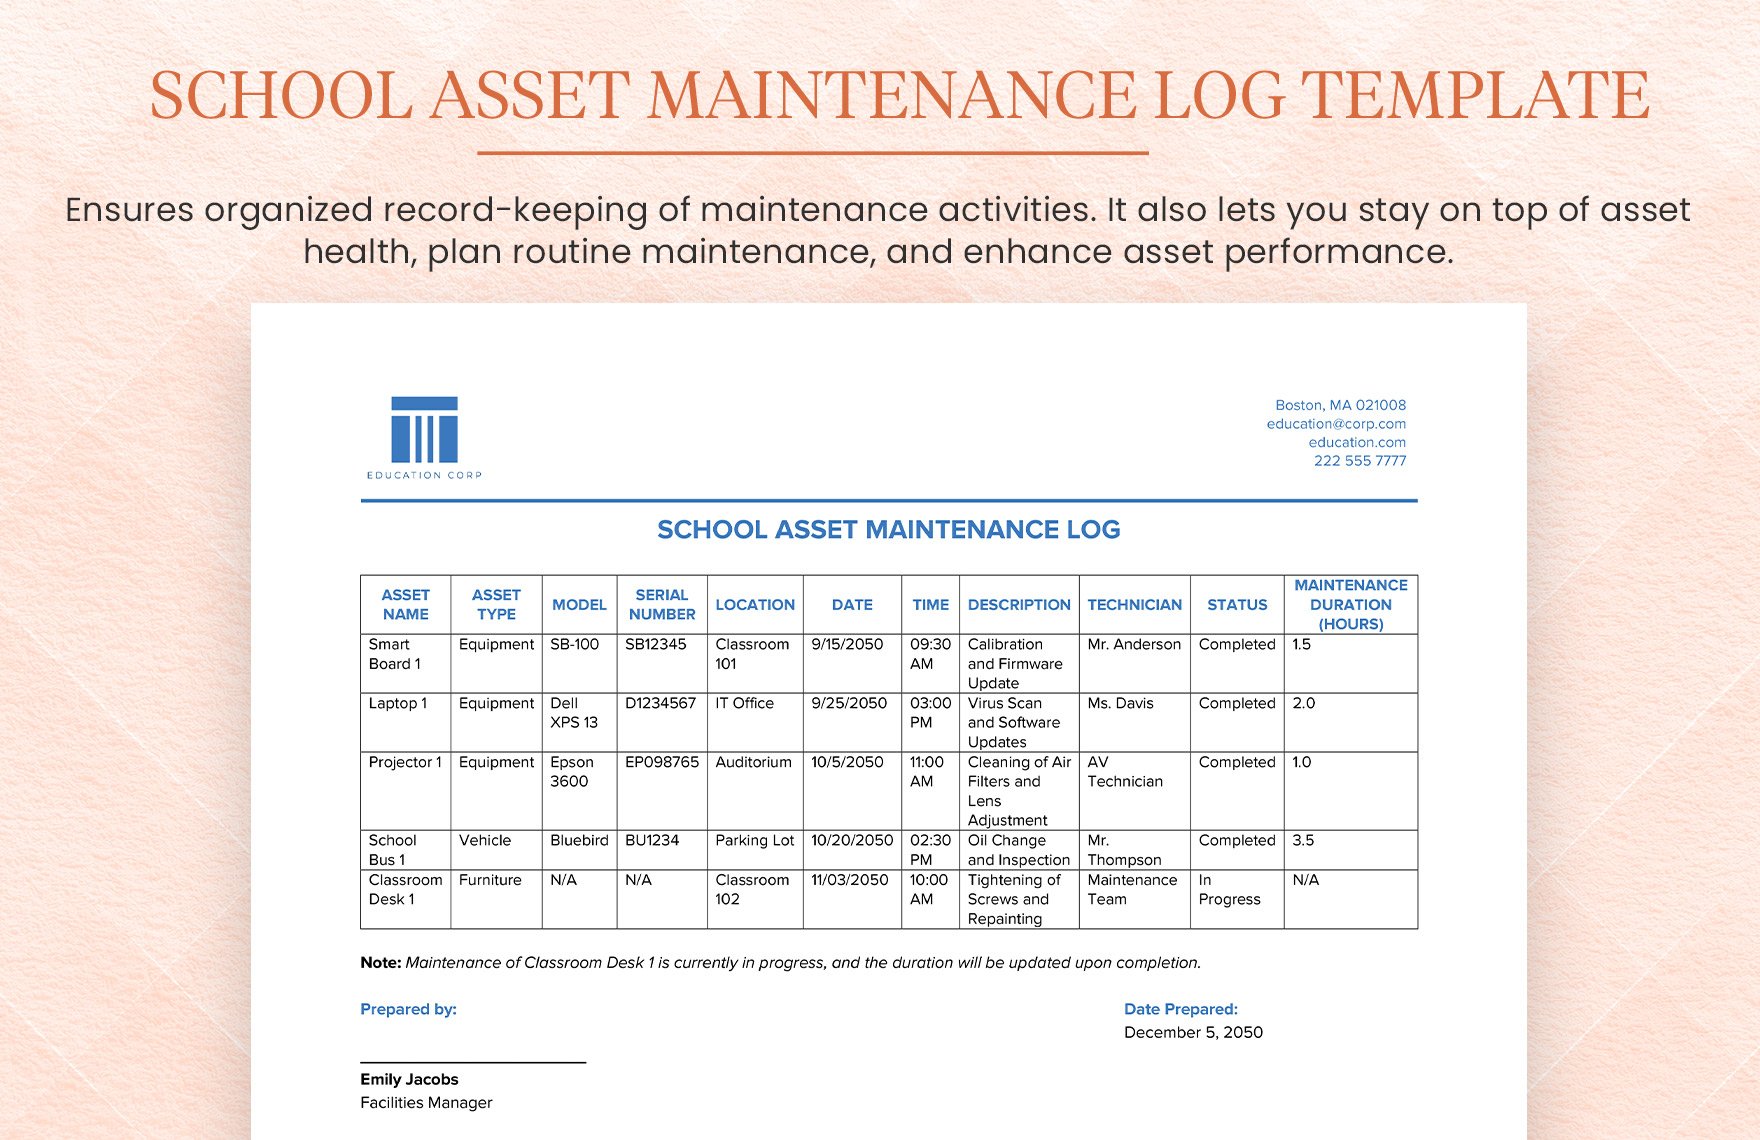 School Asset Maintenance Log Template in Word, Google Docs, PDF